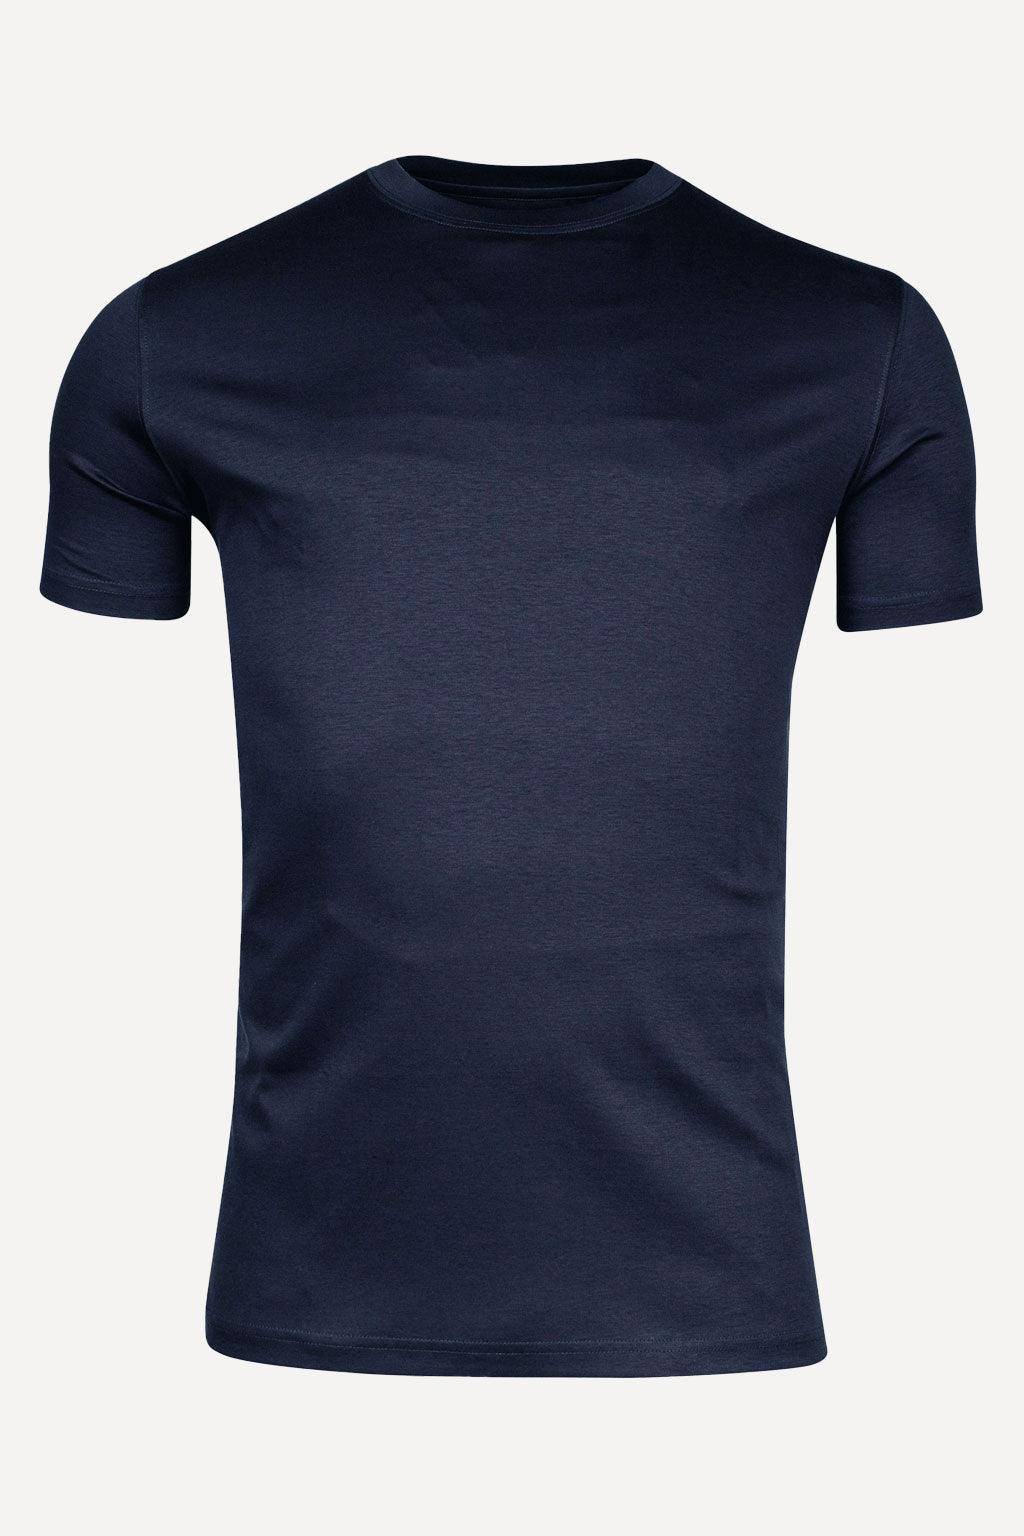 Thomas Maine t-shirt - Big Boss | the menswear concept